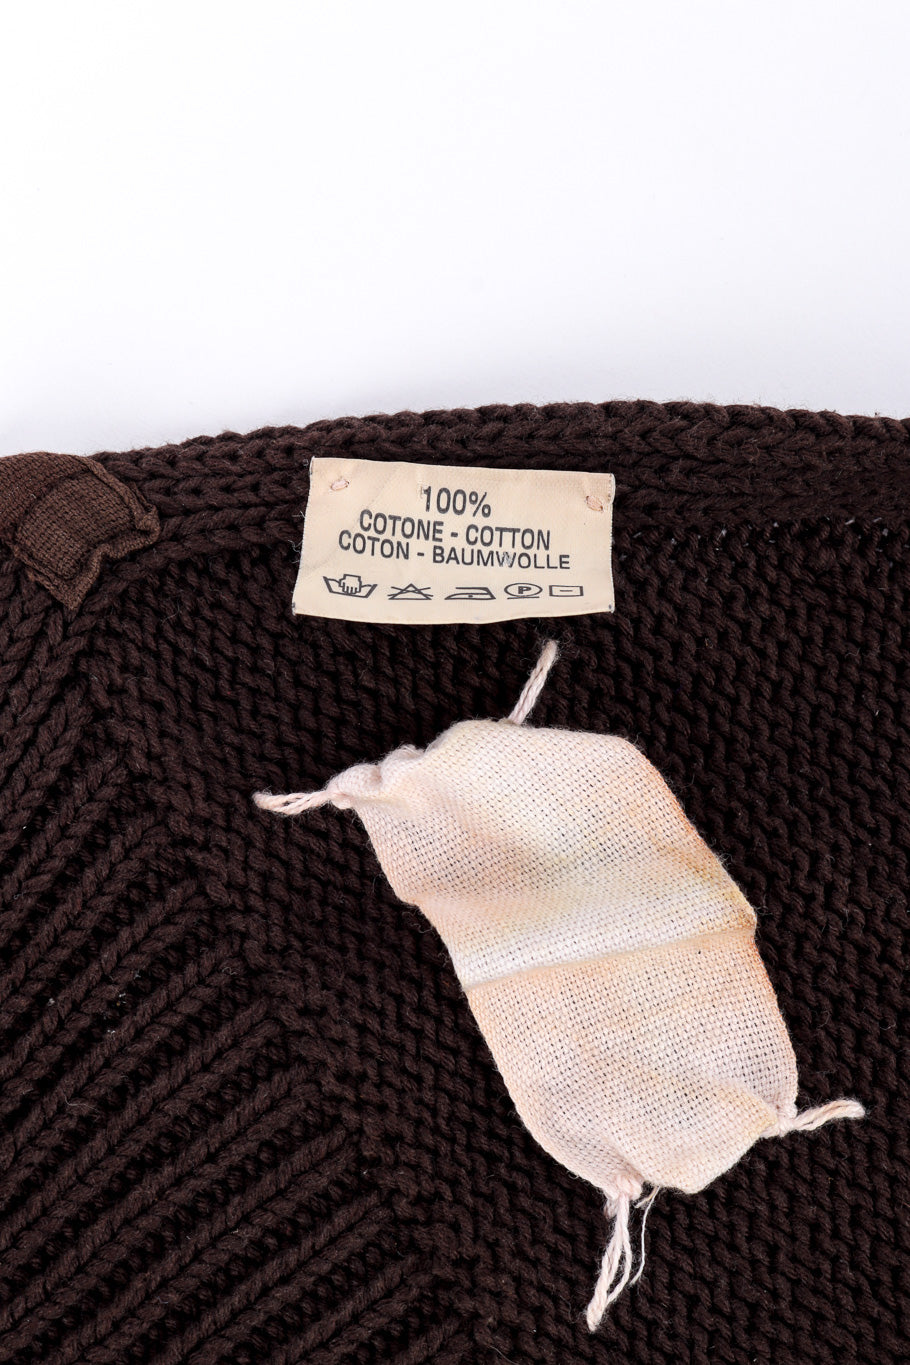 Knit halter top by Maison Margiela fabric tag @recessla